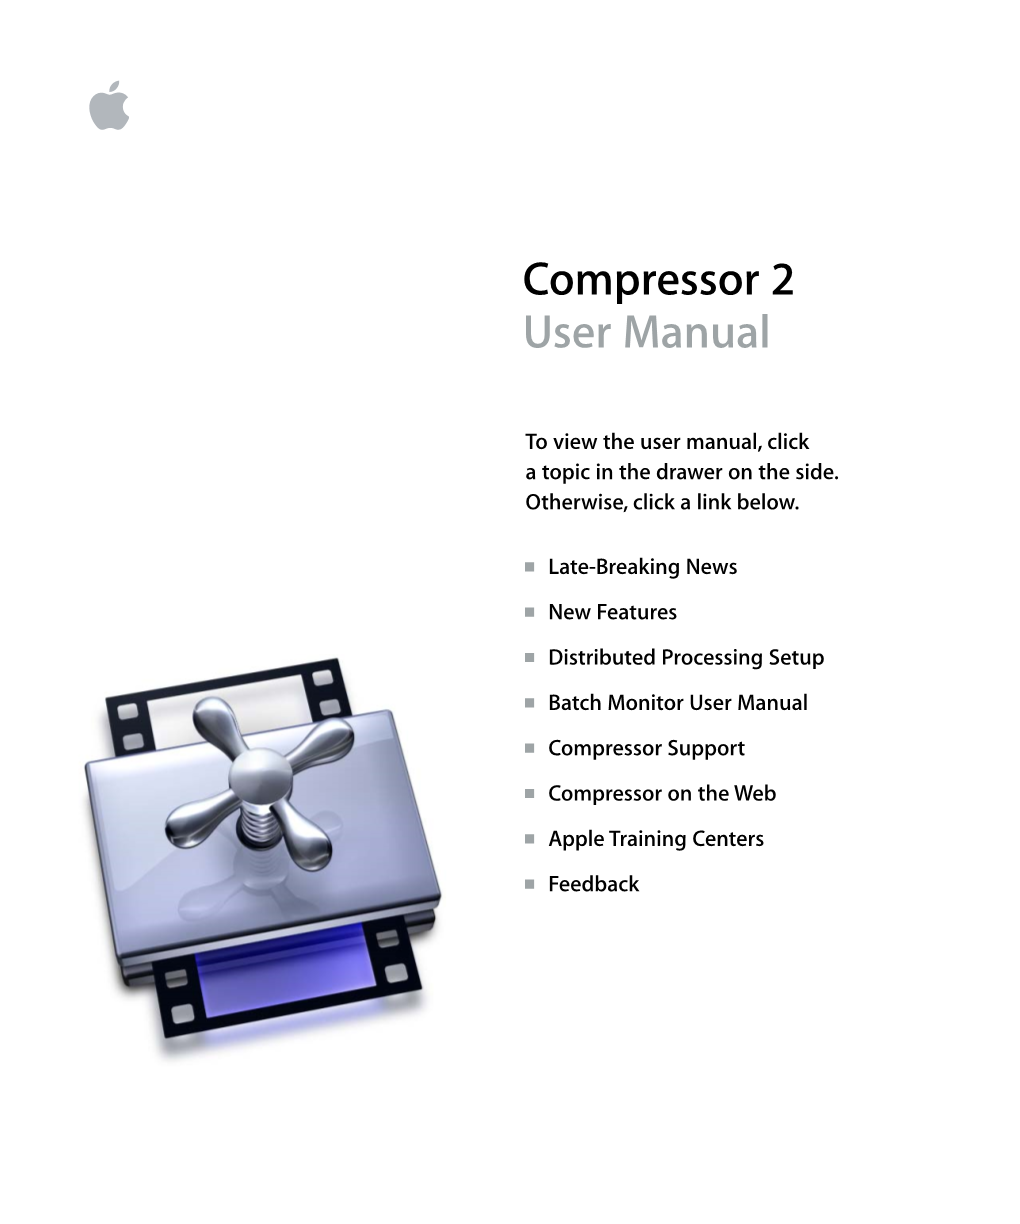 Compressor 2 User Manual